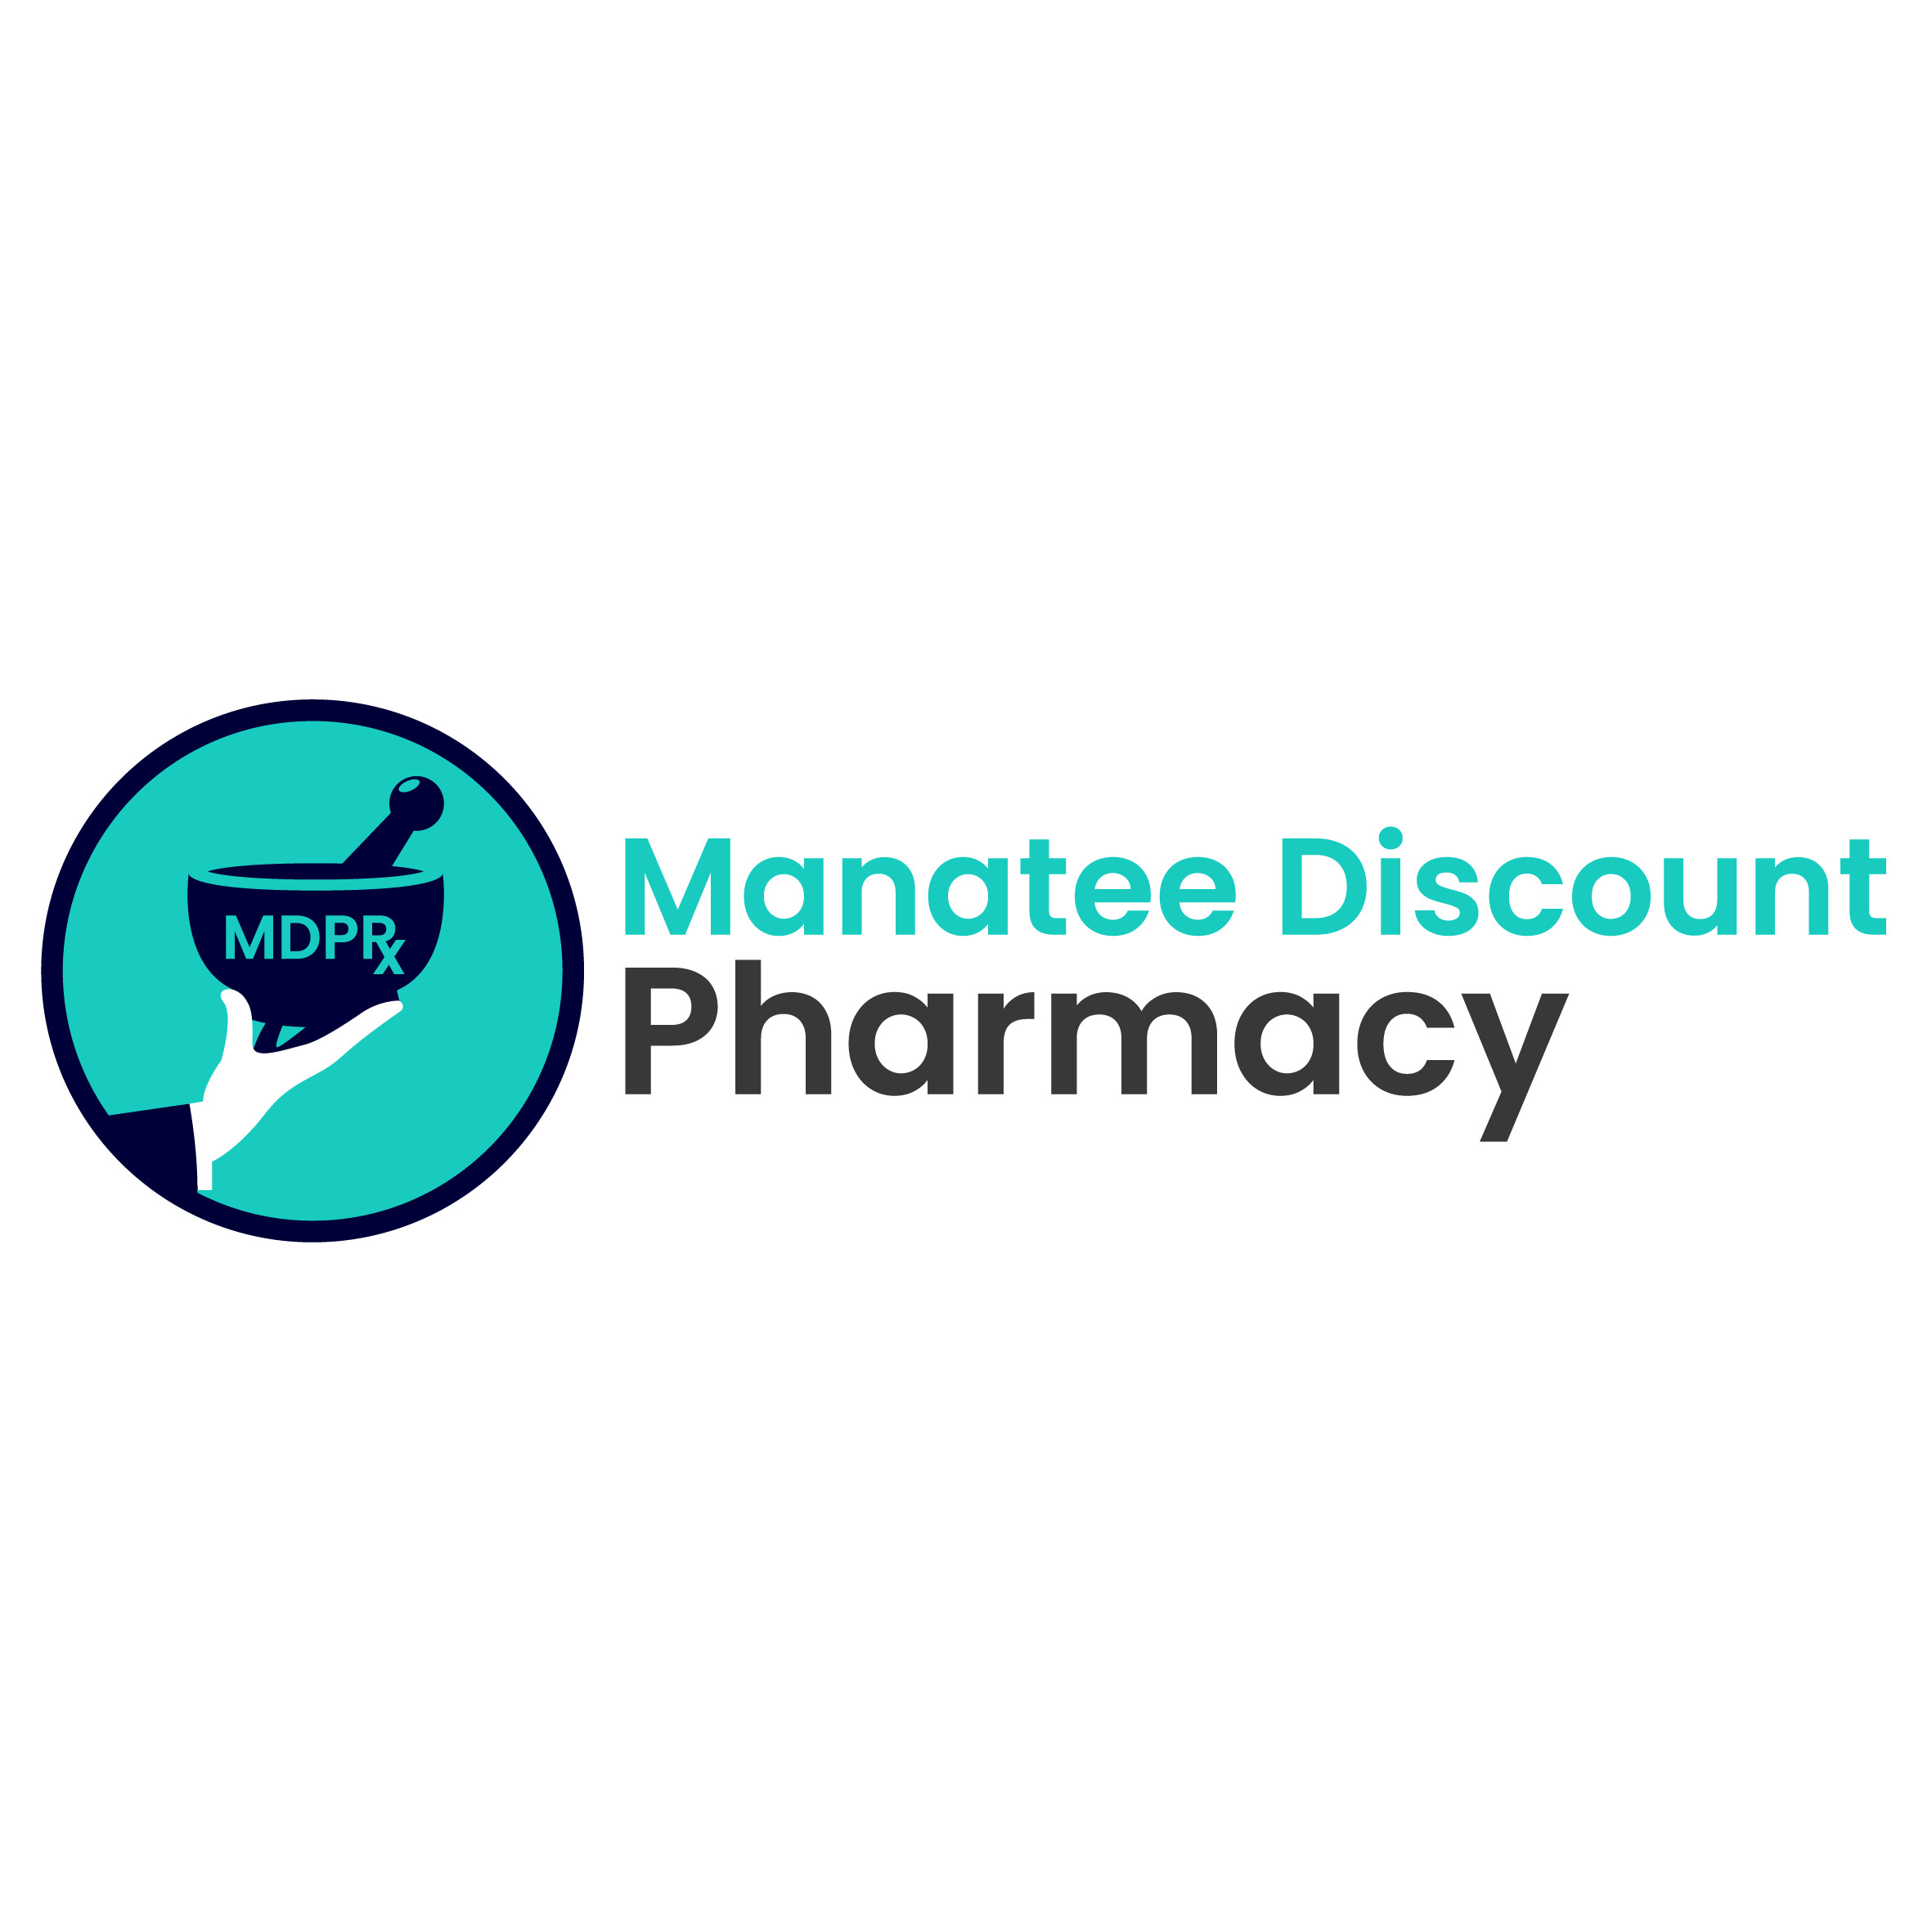 Manatee Discount Pharmacy (MDP) logo